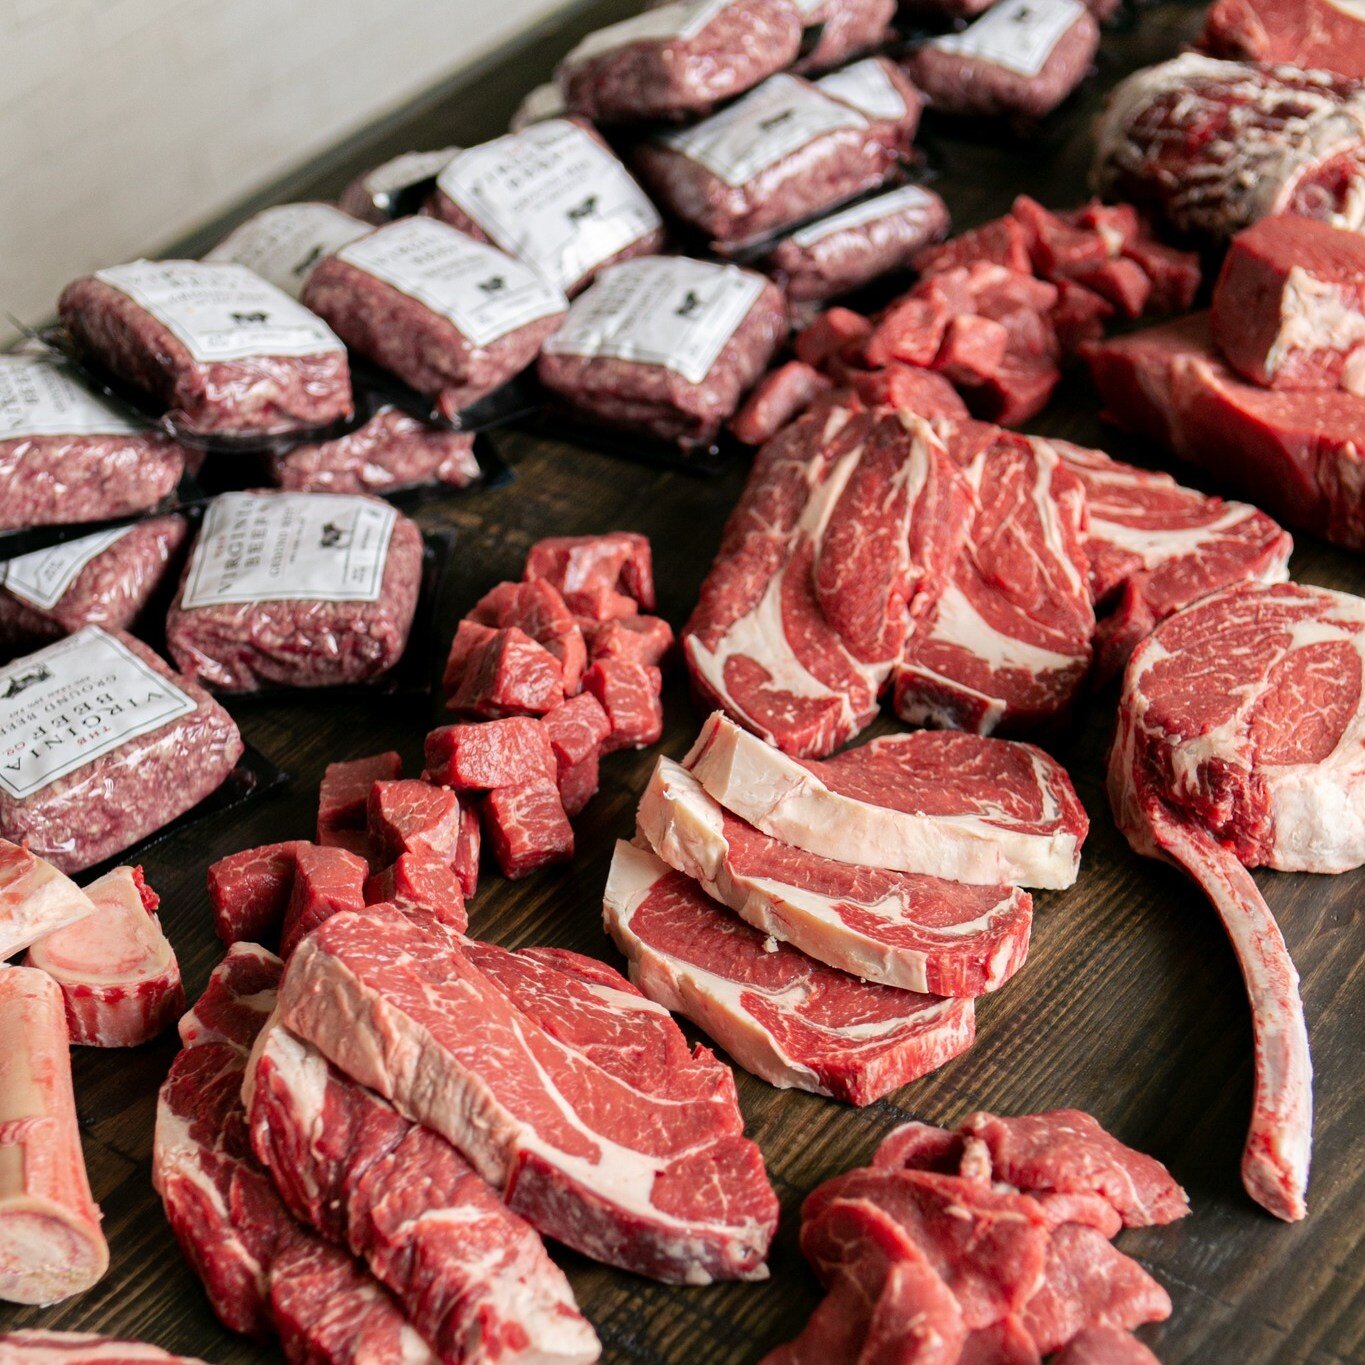 The Virginia Beef Company — Seven Hills Food